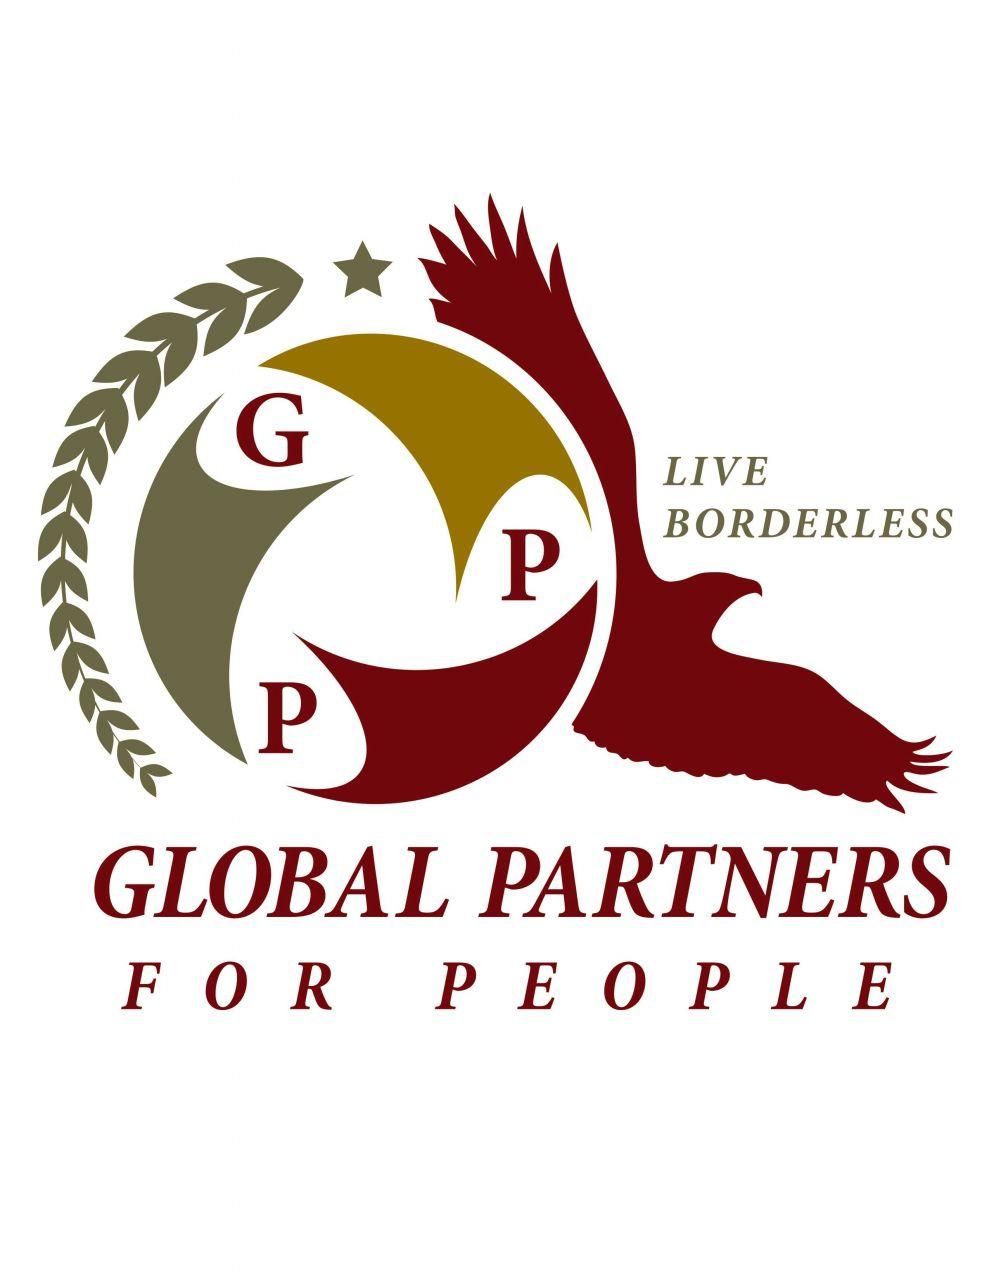 GPP Logo - Global Partners for People - GPP logo 1.jpg